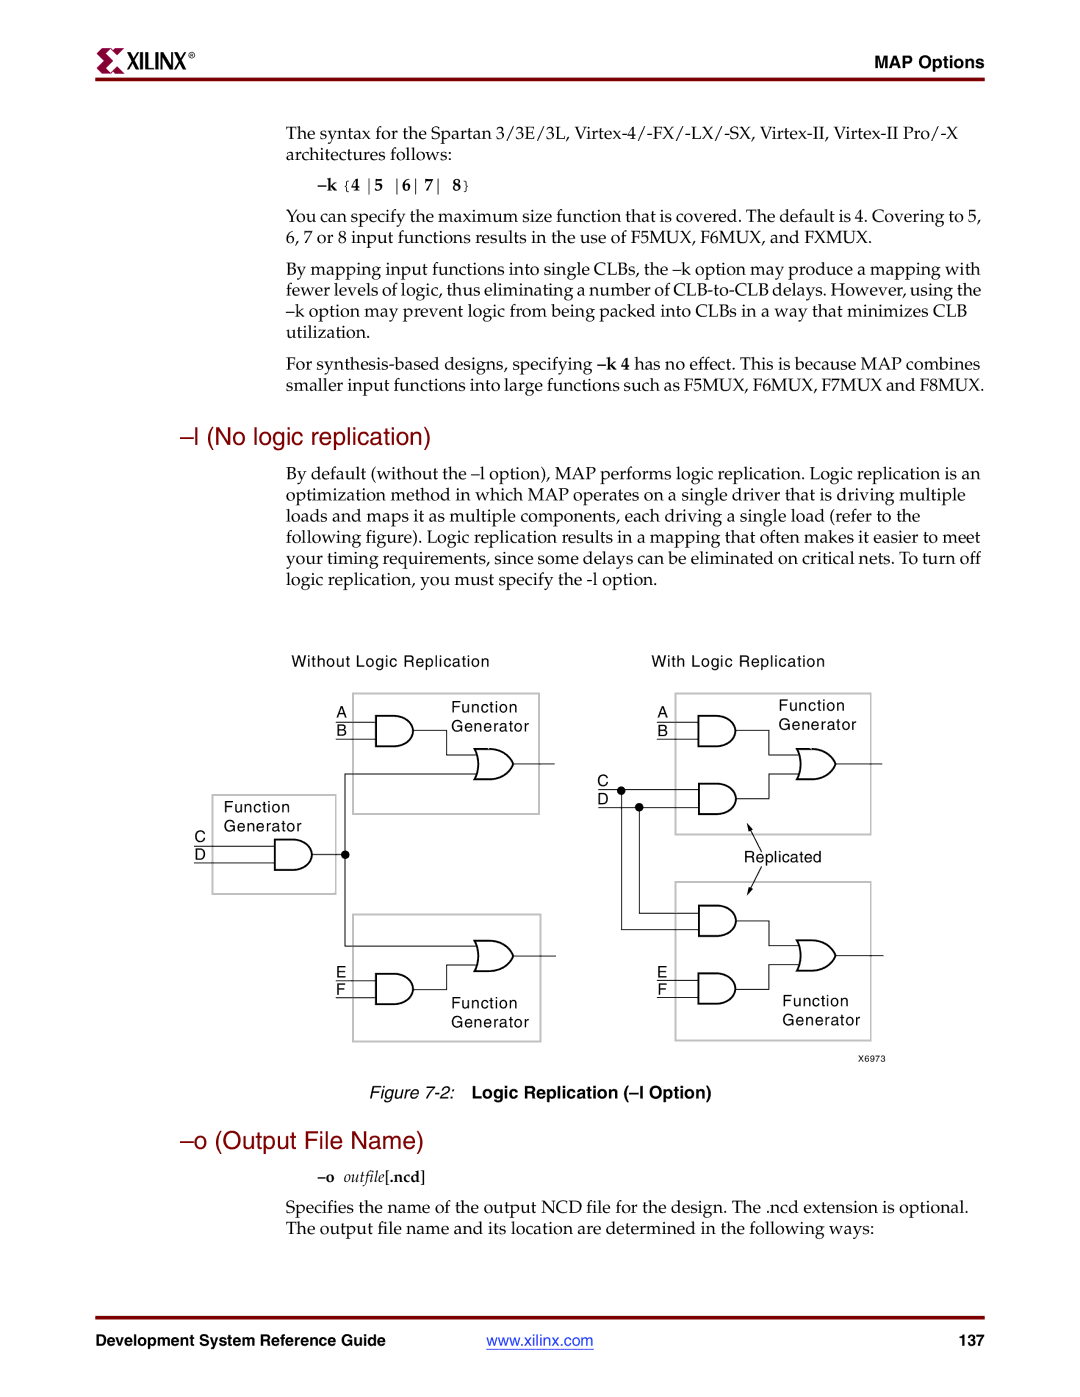 Xilinx 8.2i manual No logic replication, Output File Name 